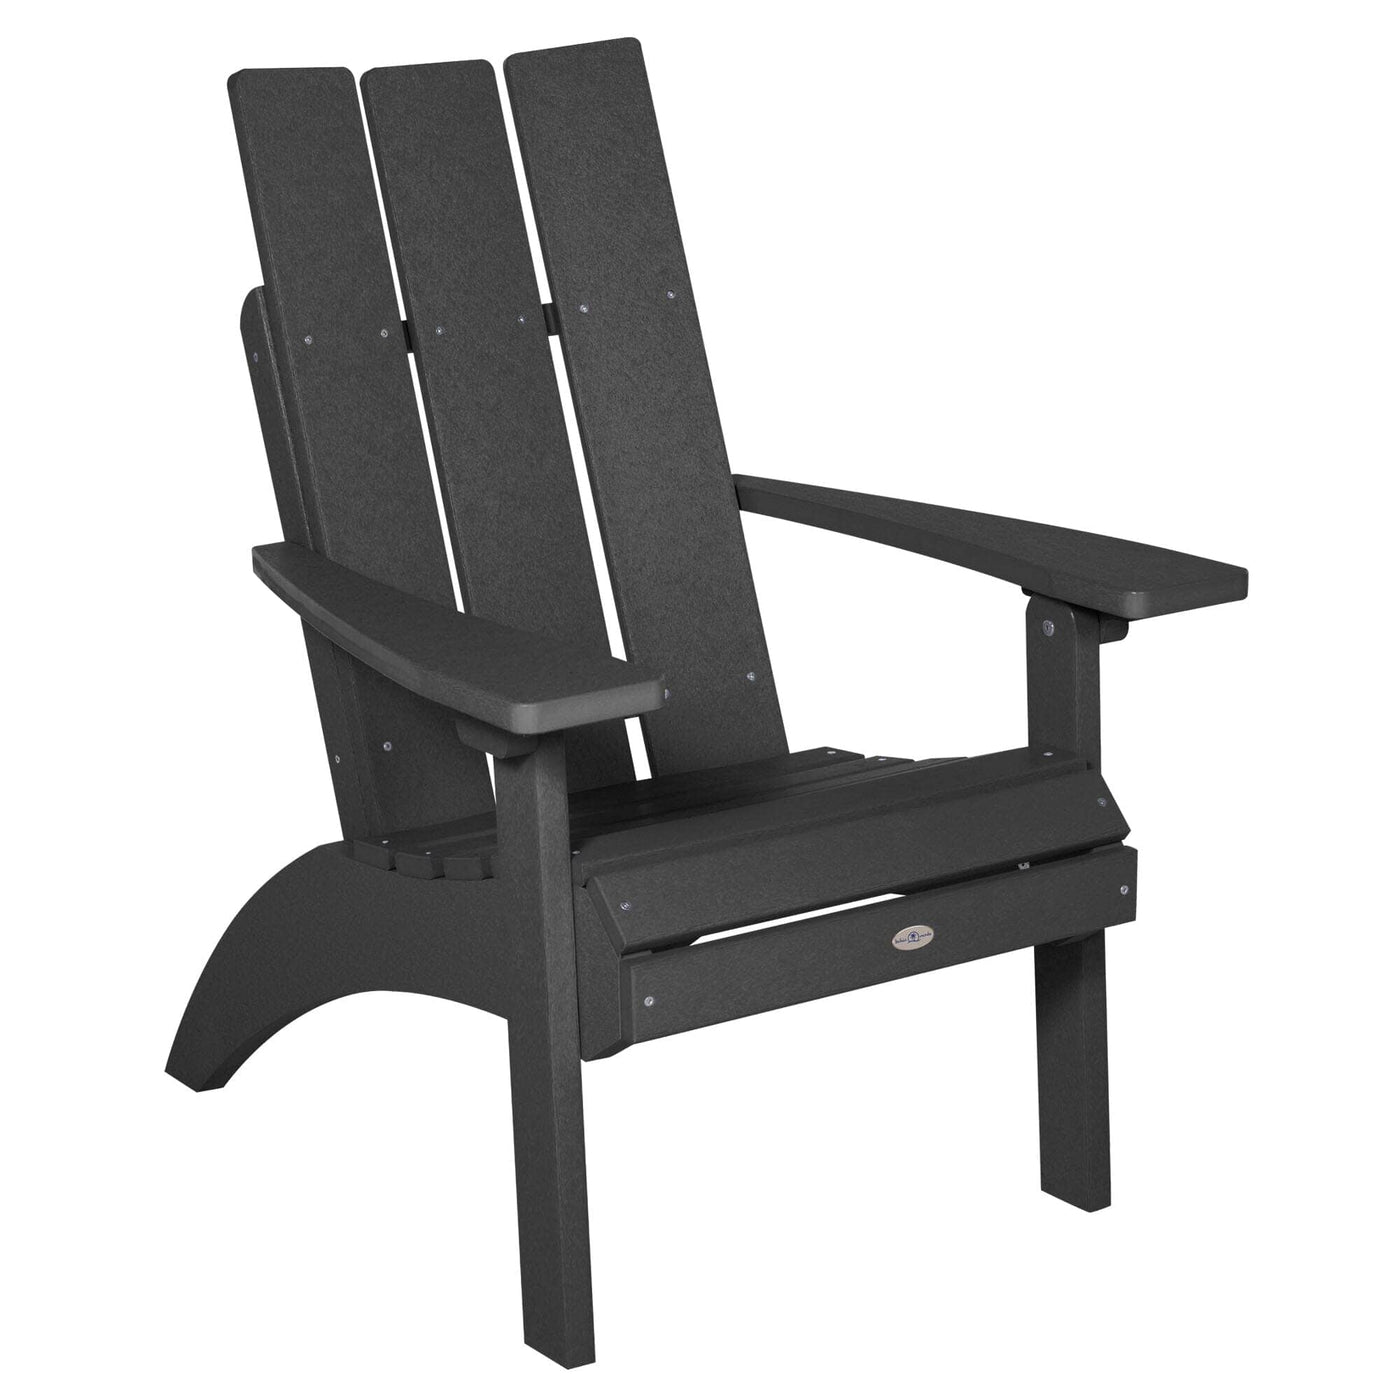 Corolla Comfort Height Adirondack Chair Chair Bahia Verde Outdoors Black Sand 